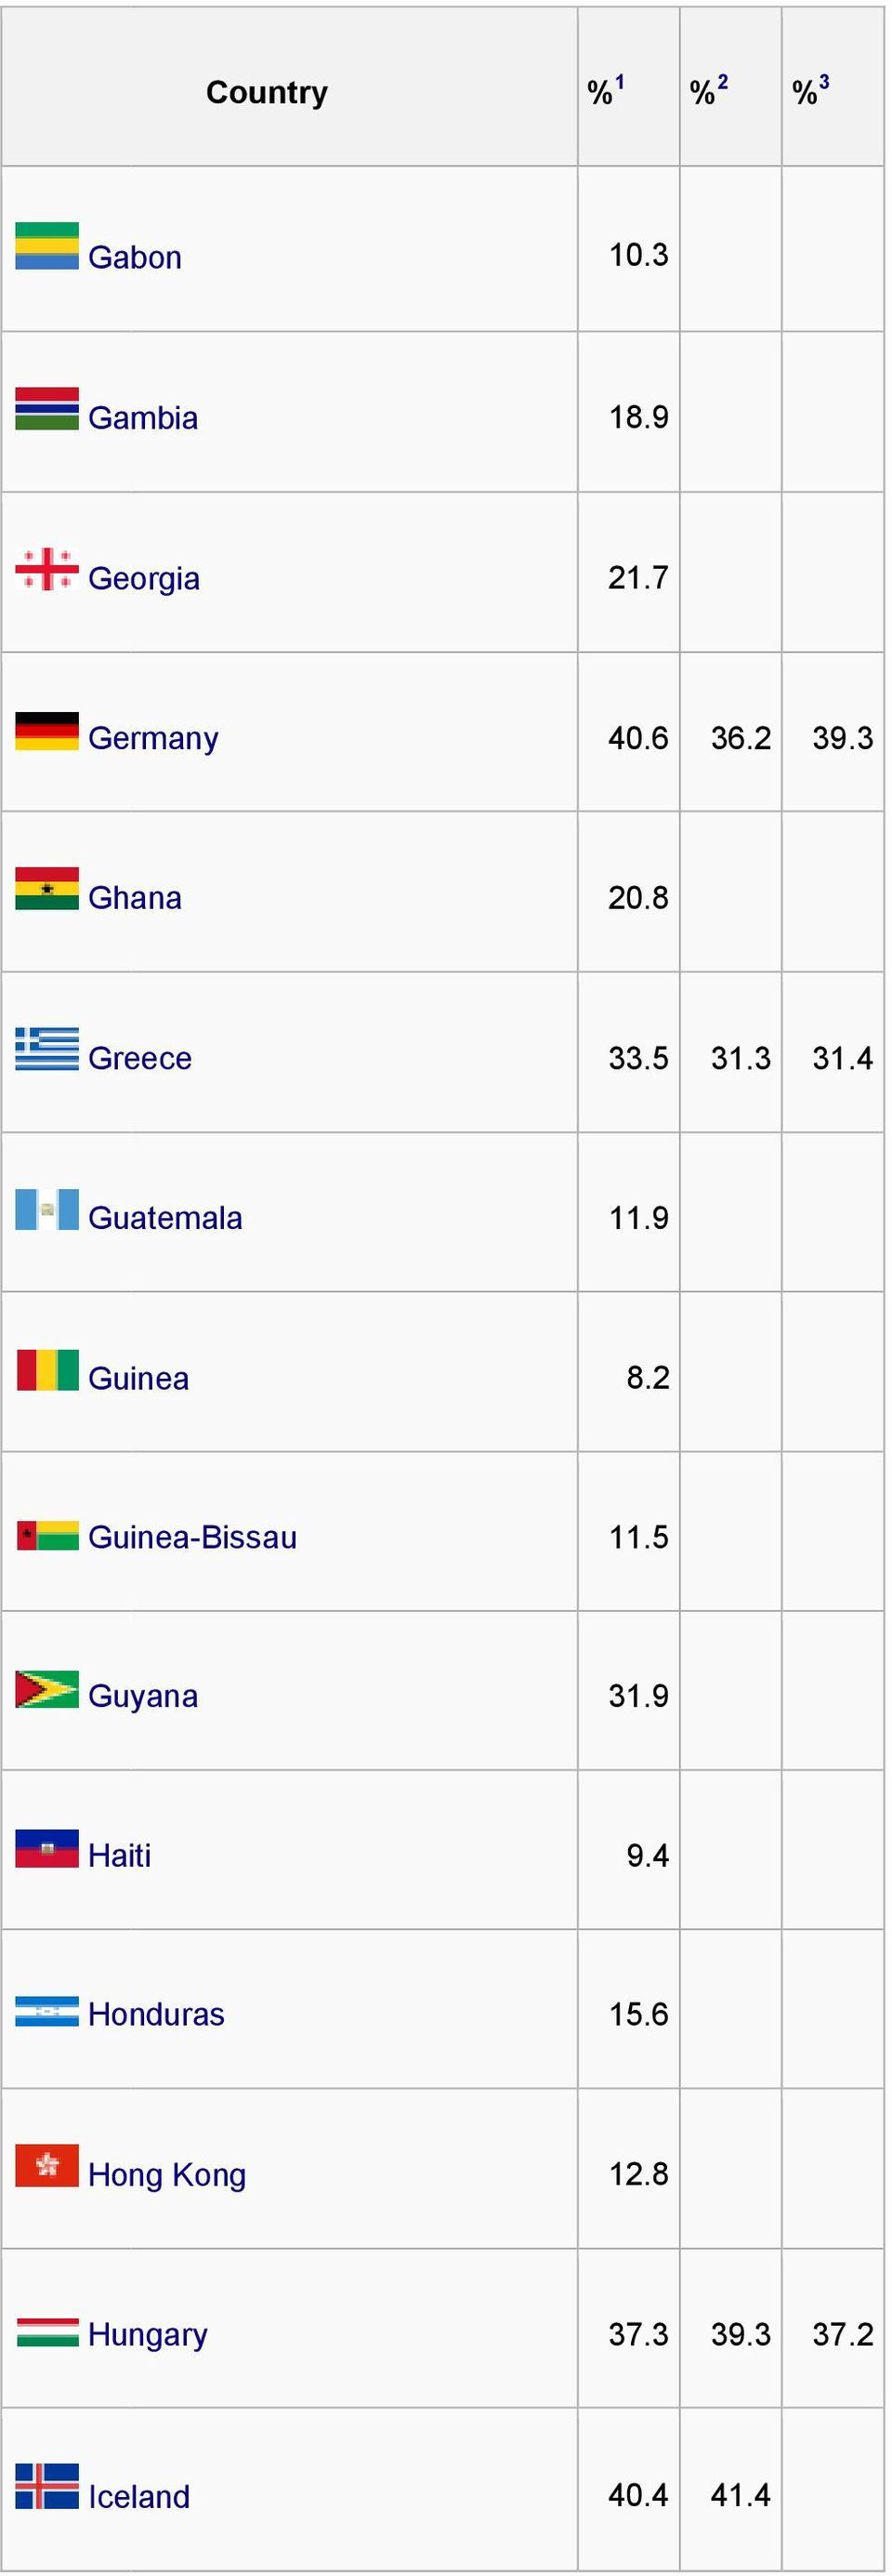 4 Guatemala 11.9 Guinea 8.2 Guinea-Bissau 11.5 Guyana 31.